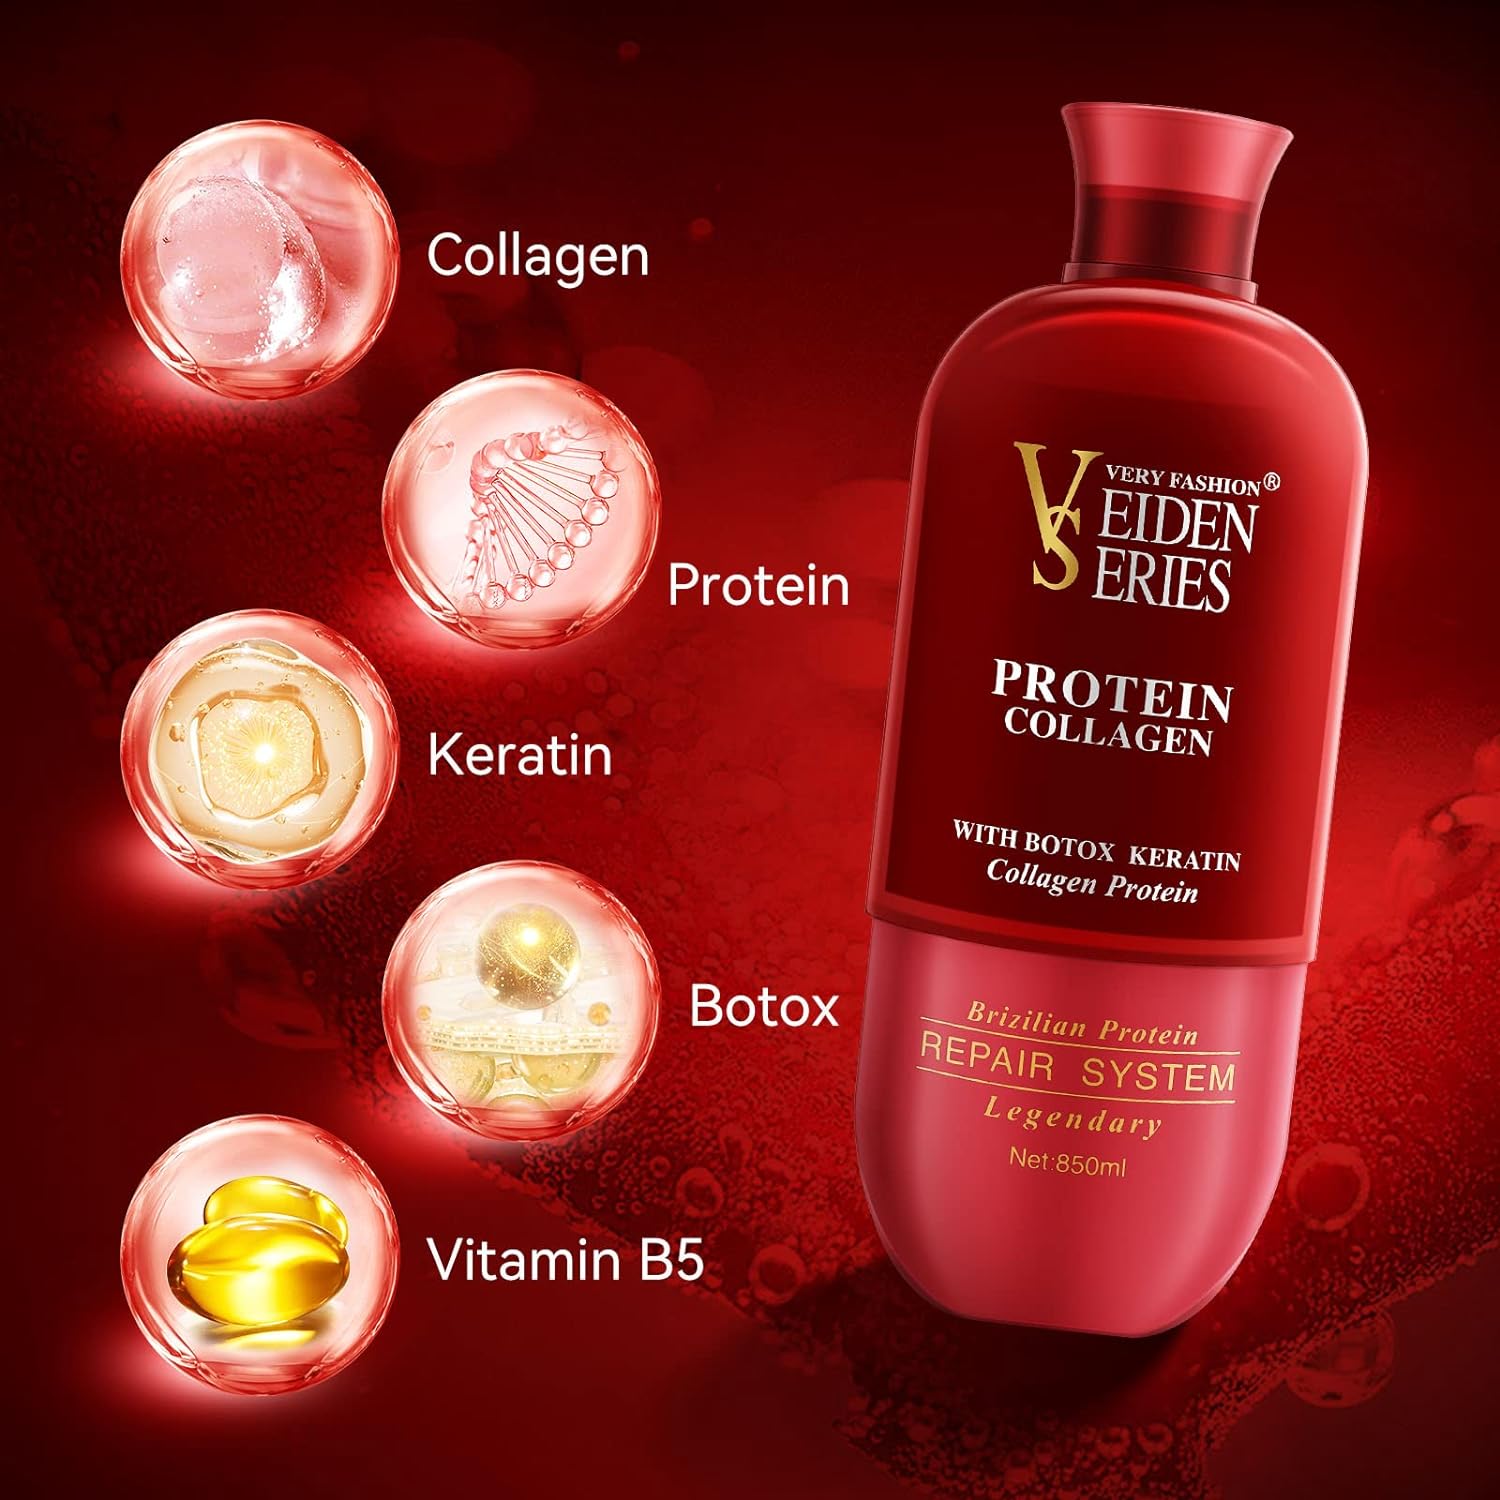 پروتئین مو ویدن سریس حاوی کلاژن و بوتاکس Veiden Series Protein